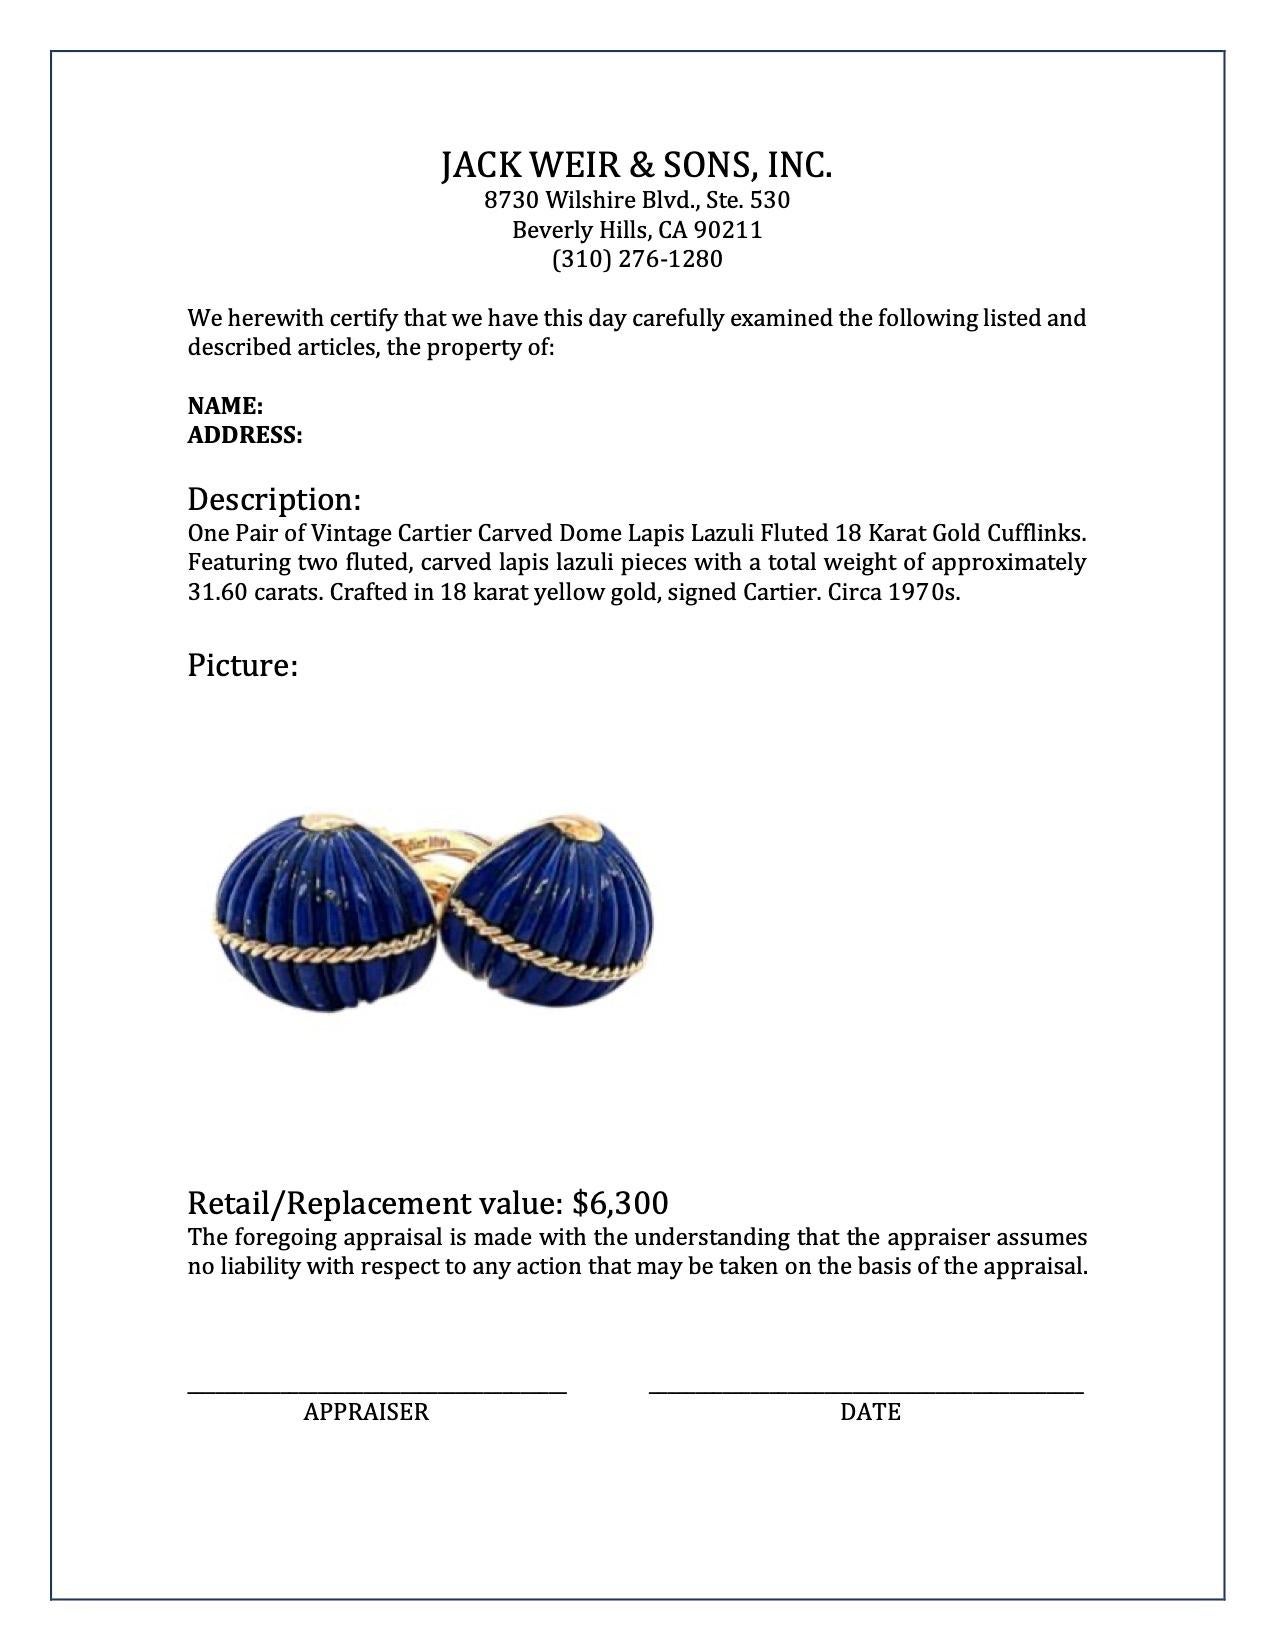 Vintage Cartier Carved Dome Lapis Lazuli Fluted 18 Karat Gold Cufflinks 2